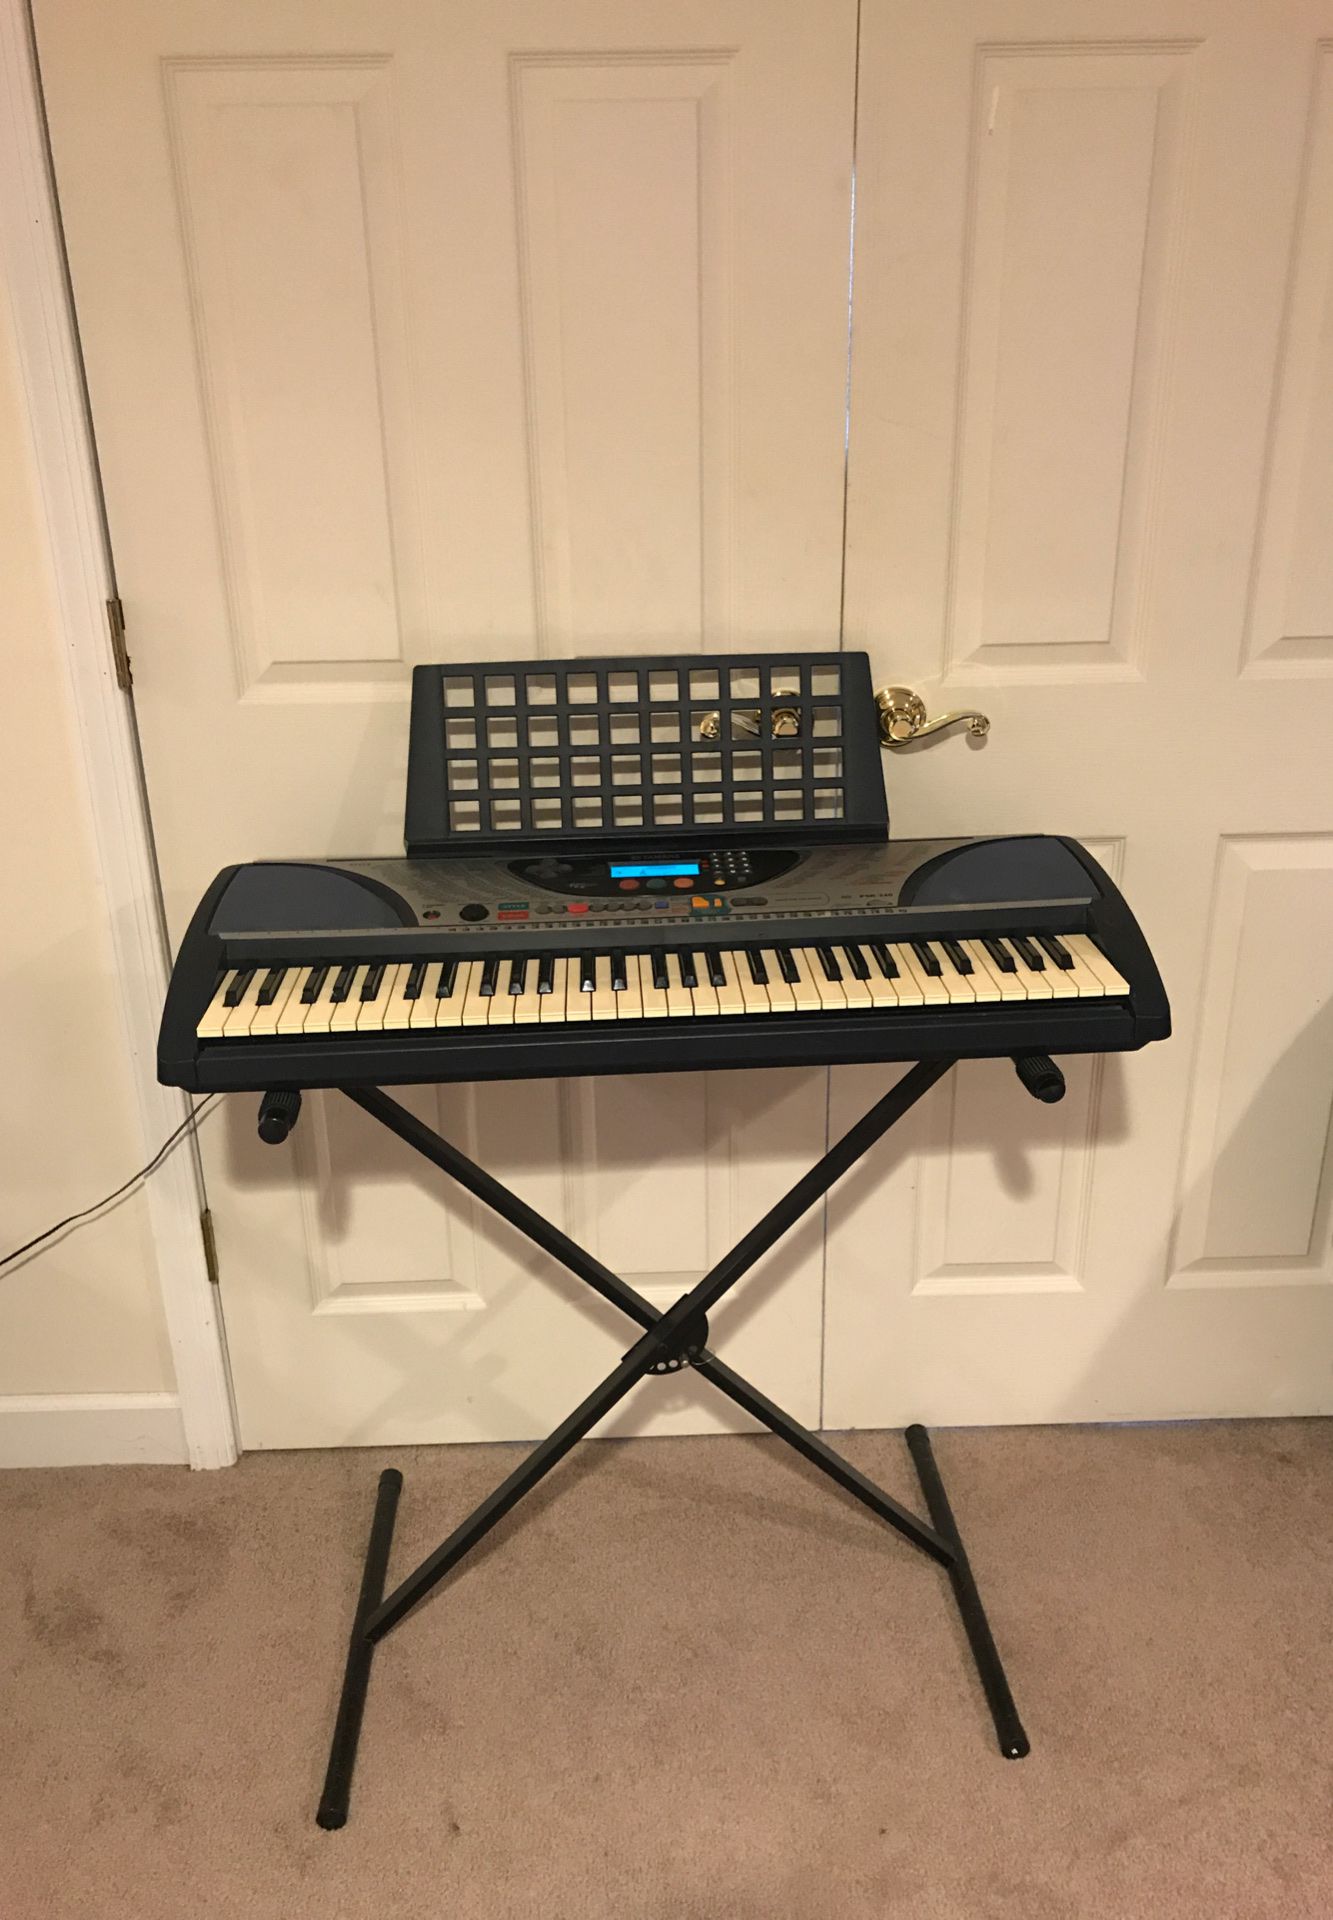 Yamaha PSR-240 Keyboard Synth 61-key Digital Piano w/Star Wars Theme Built-in